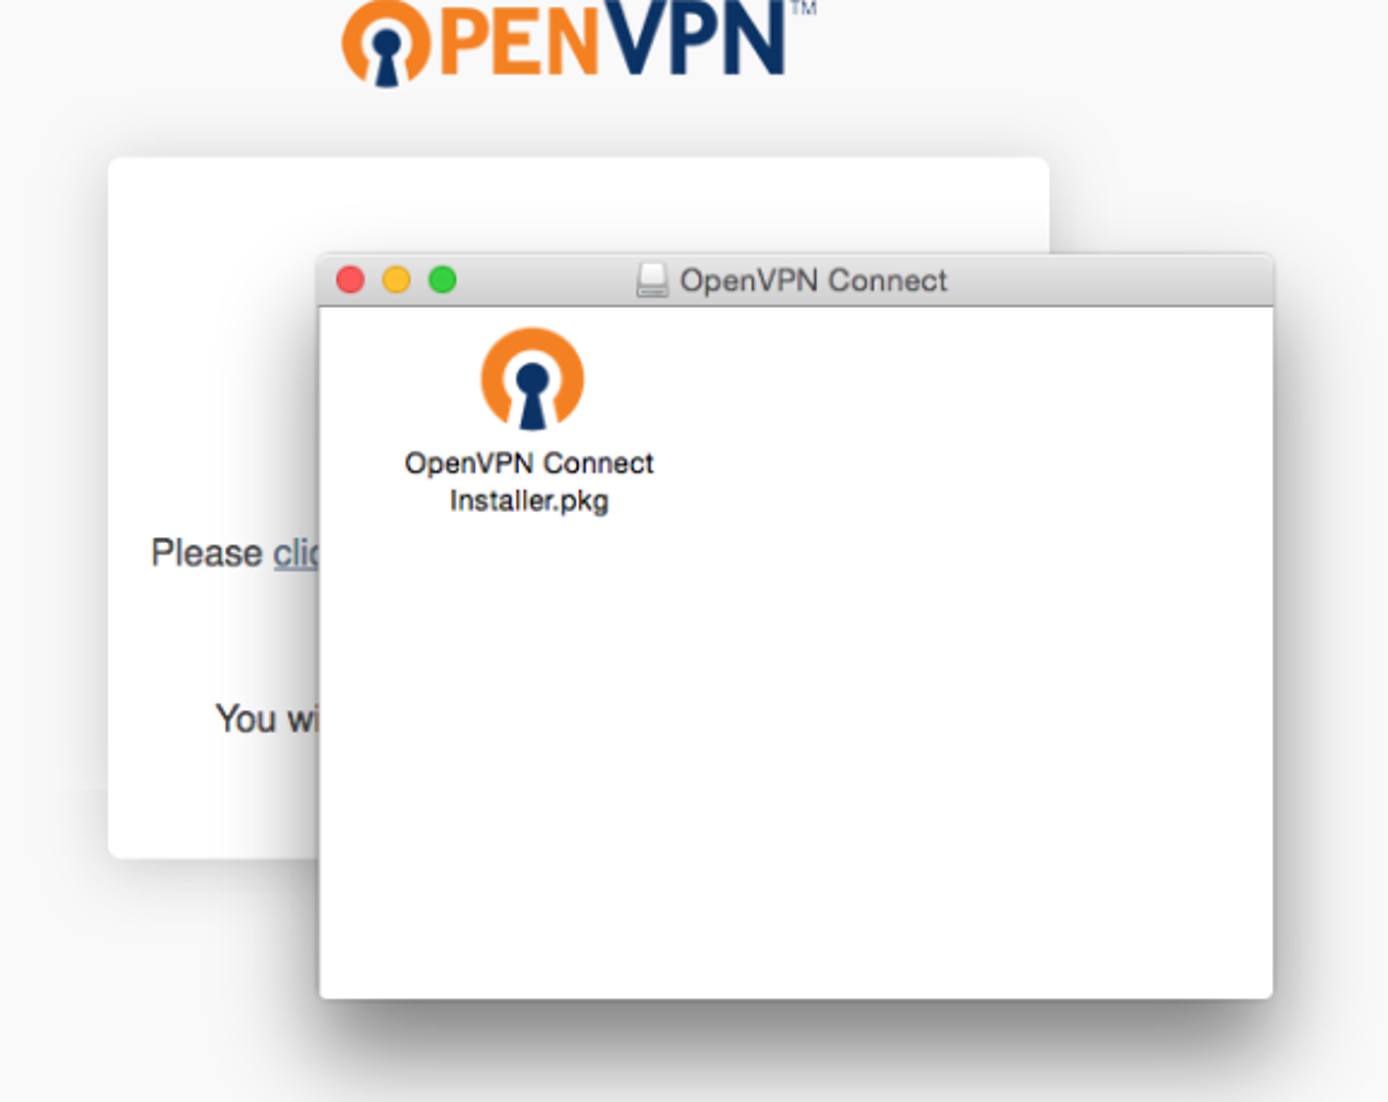 Manage OpenVPN with OpenVPN Access Server